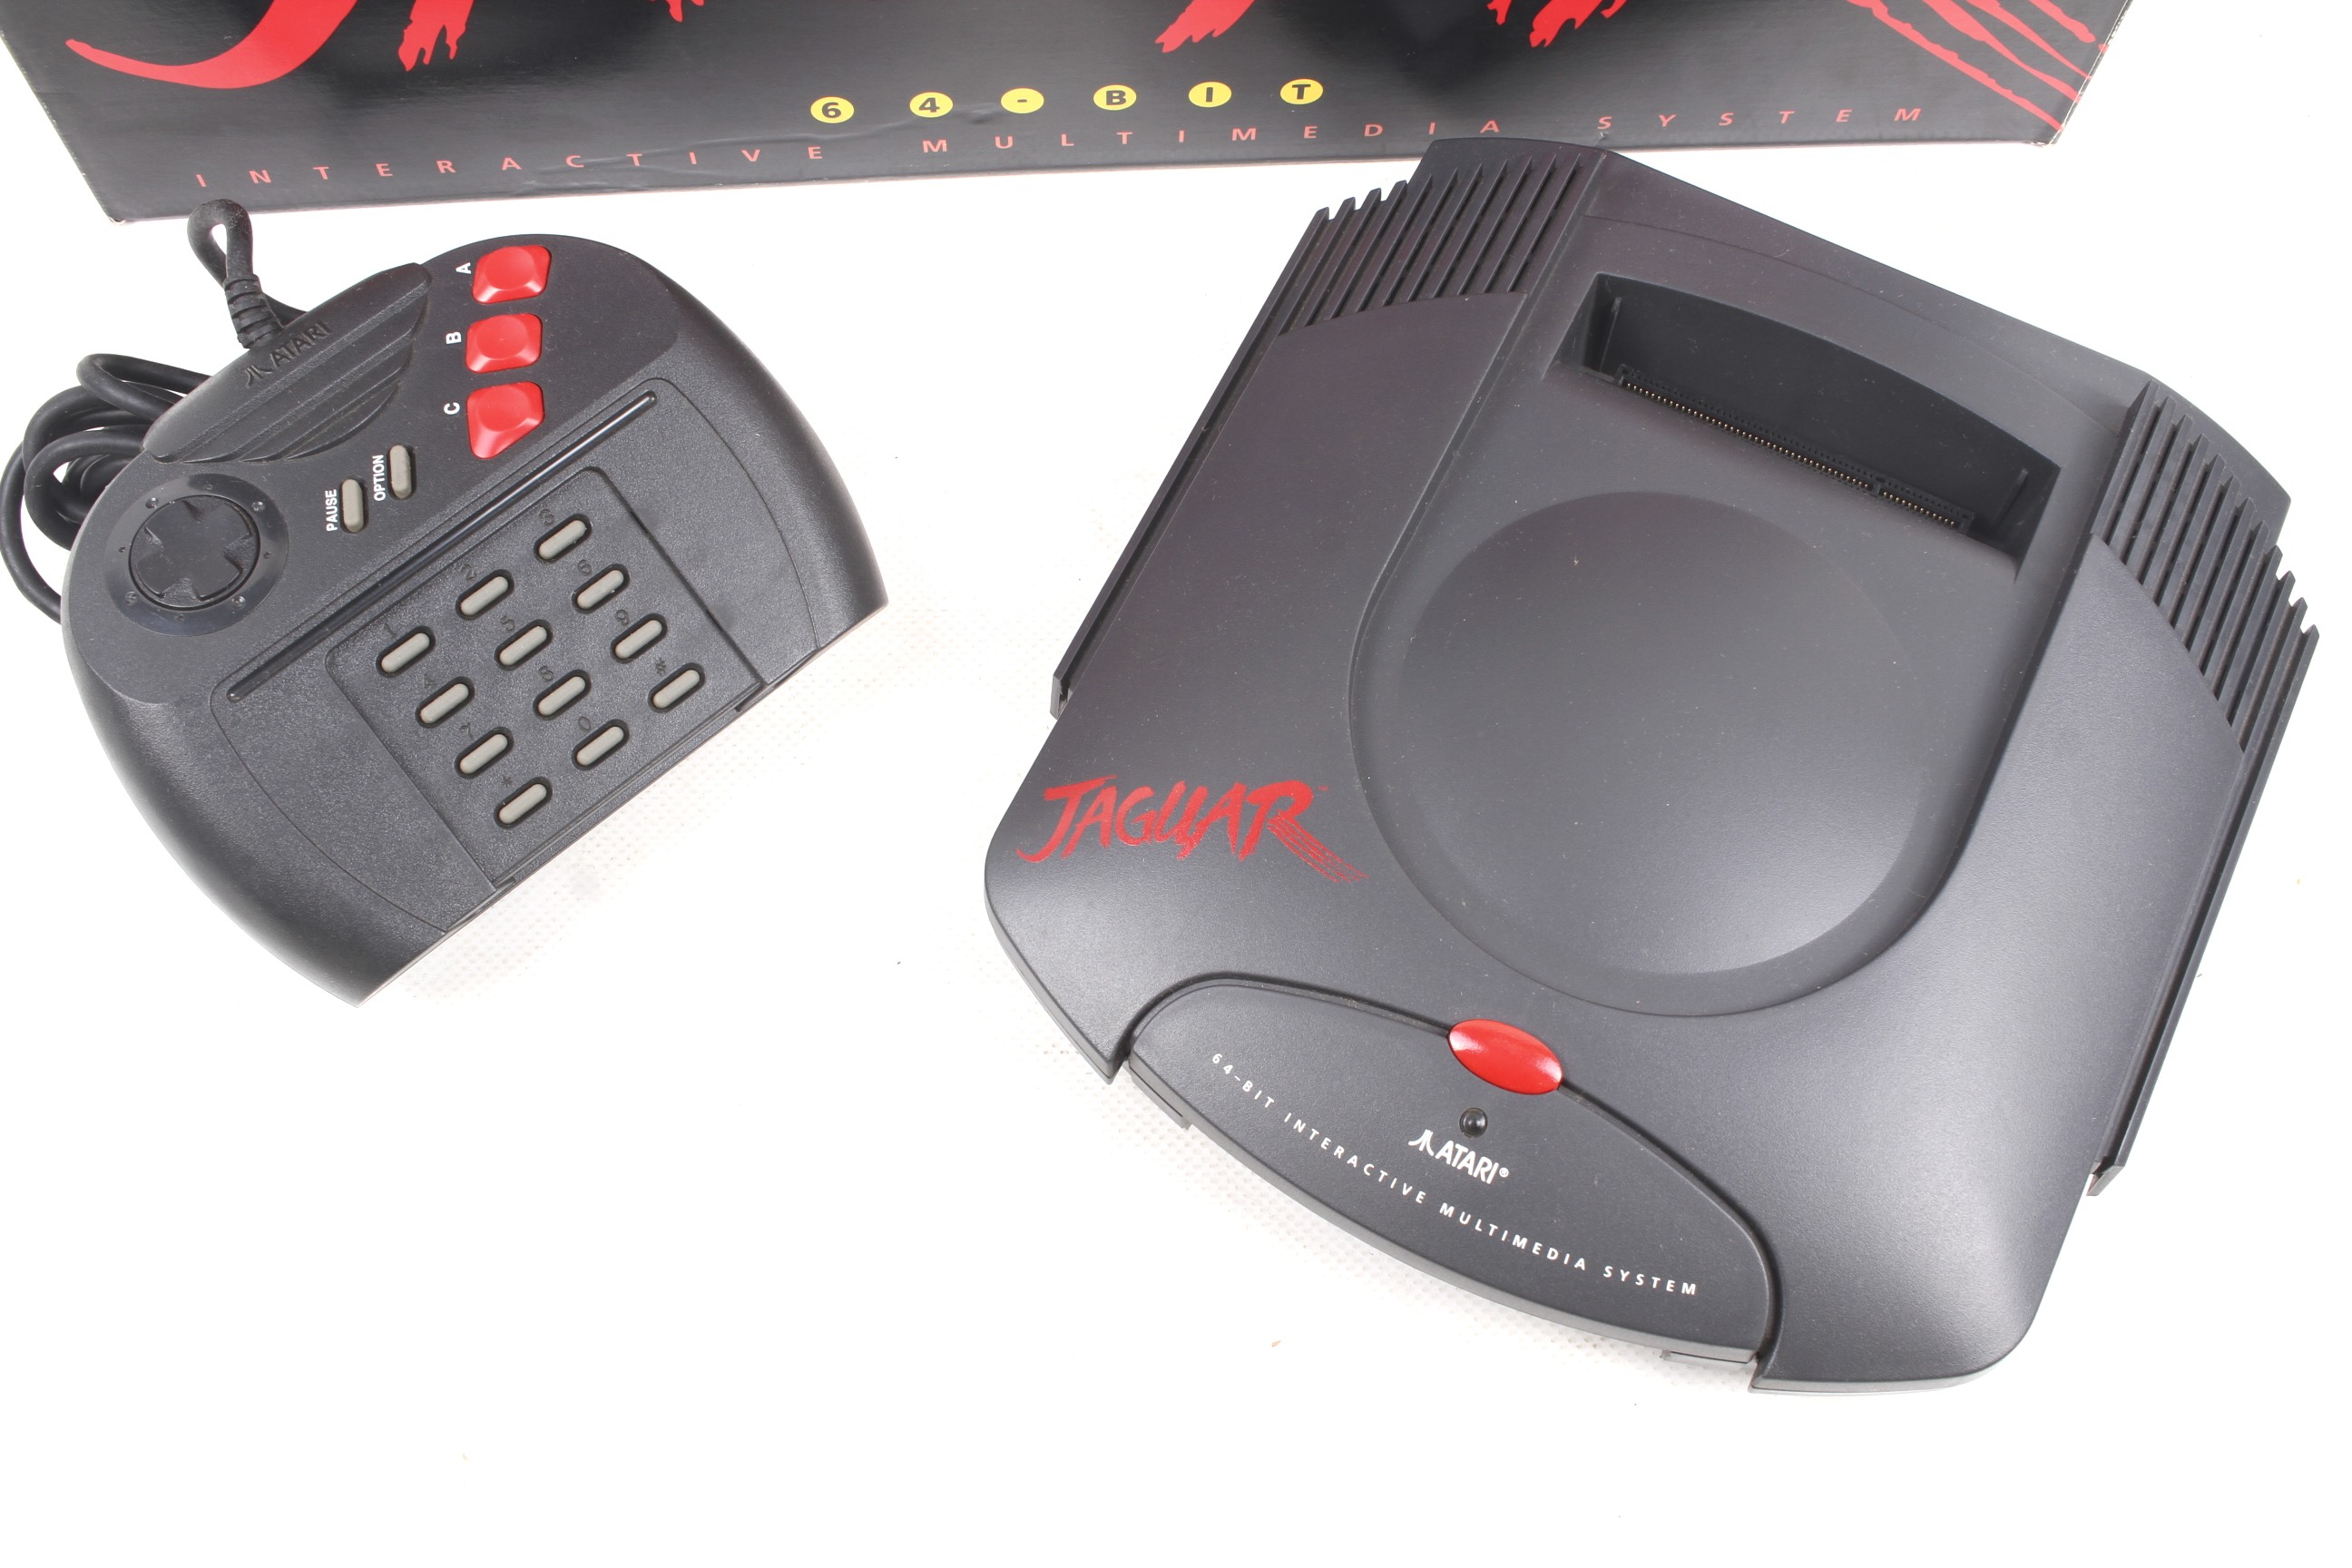 An Atari Jaguar interactive multimedia system. - Image 2 of 2